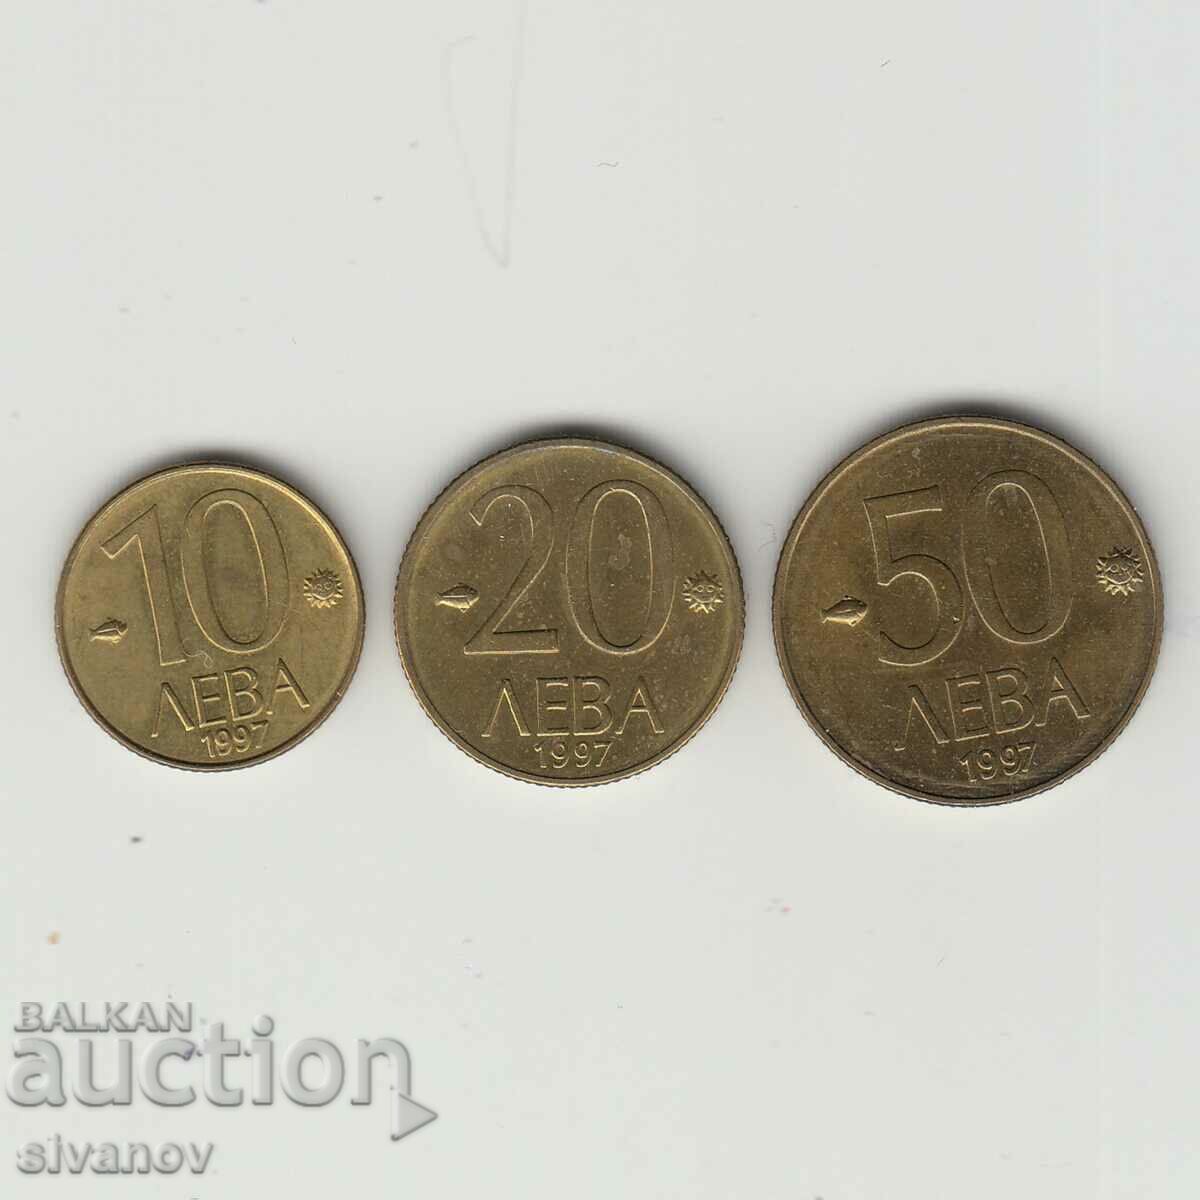 Bulgaria 10, 20, 50 leva 1997 set lot #5413